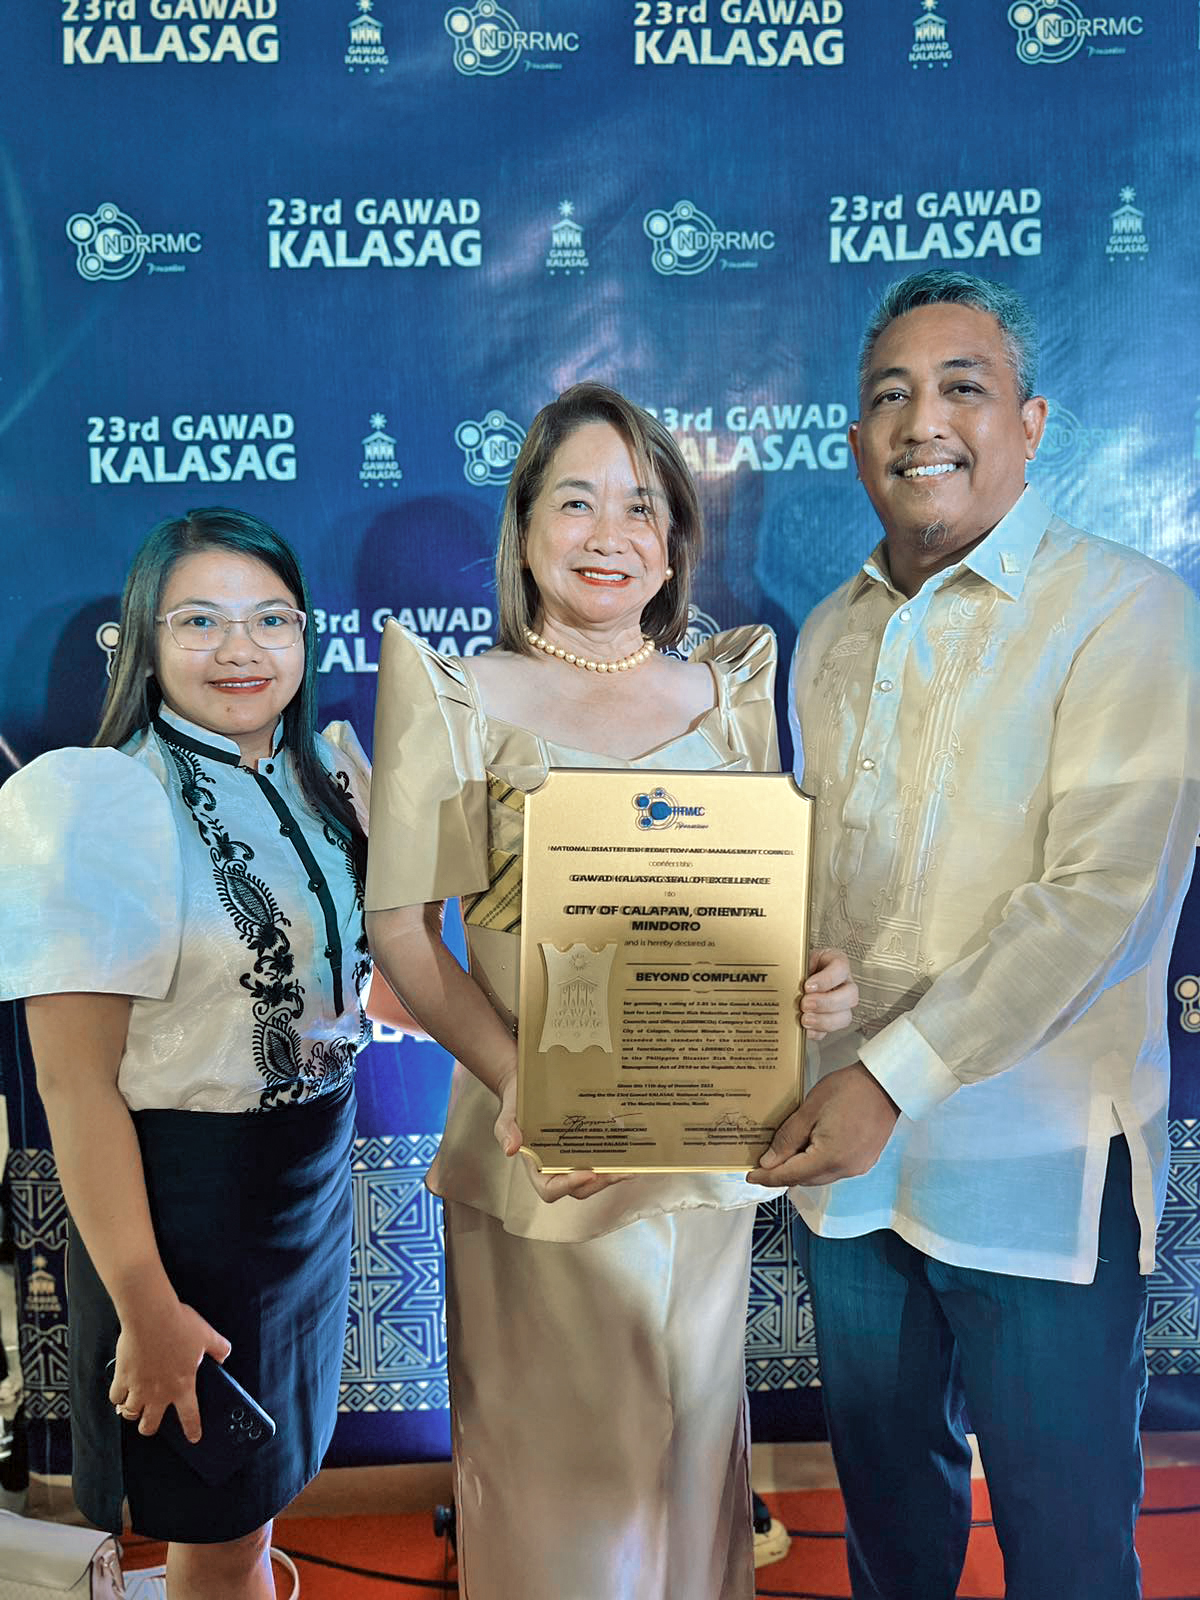 23rd Gawad KALASAG Awarding Ceremony